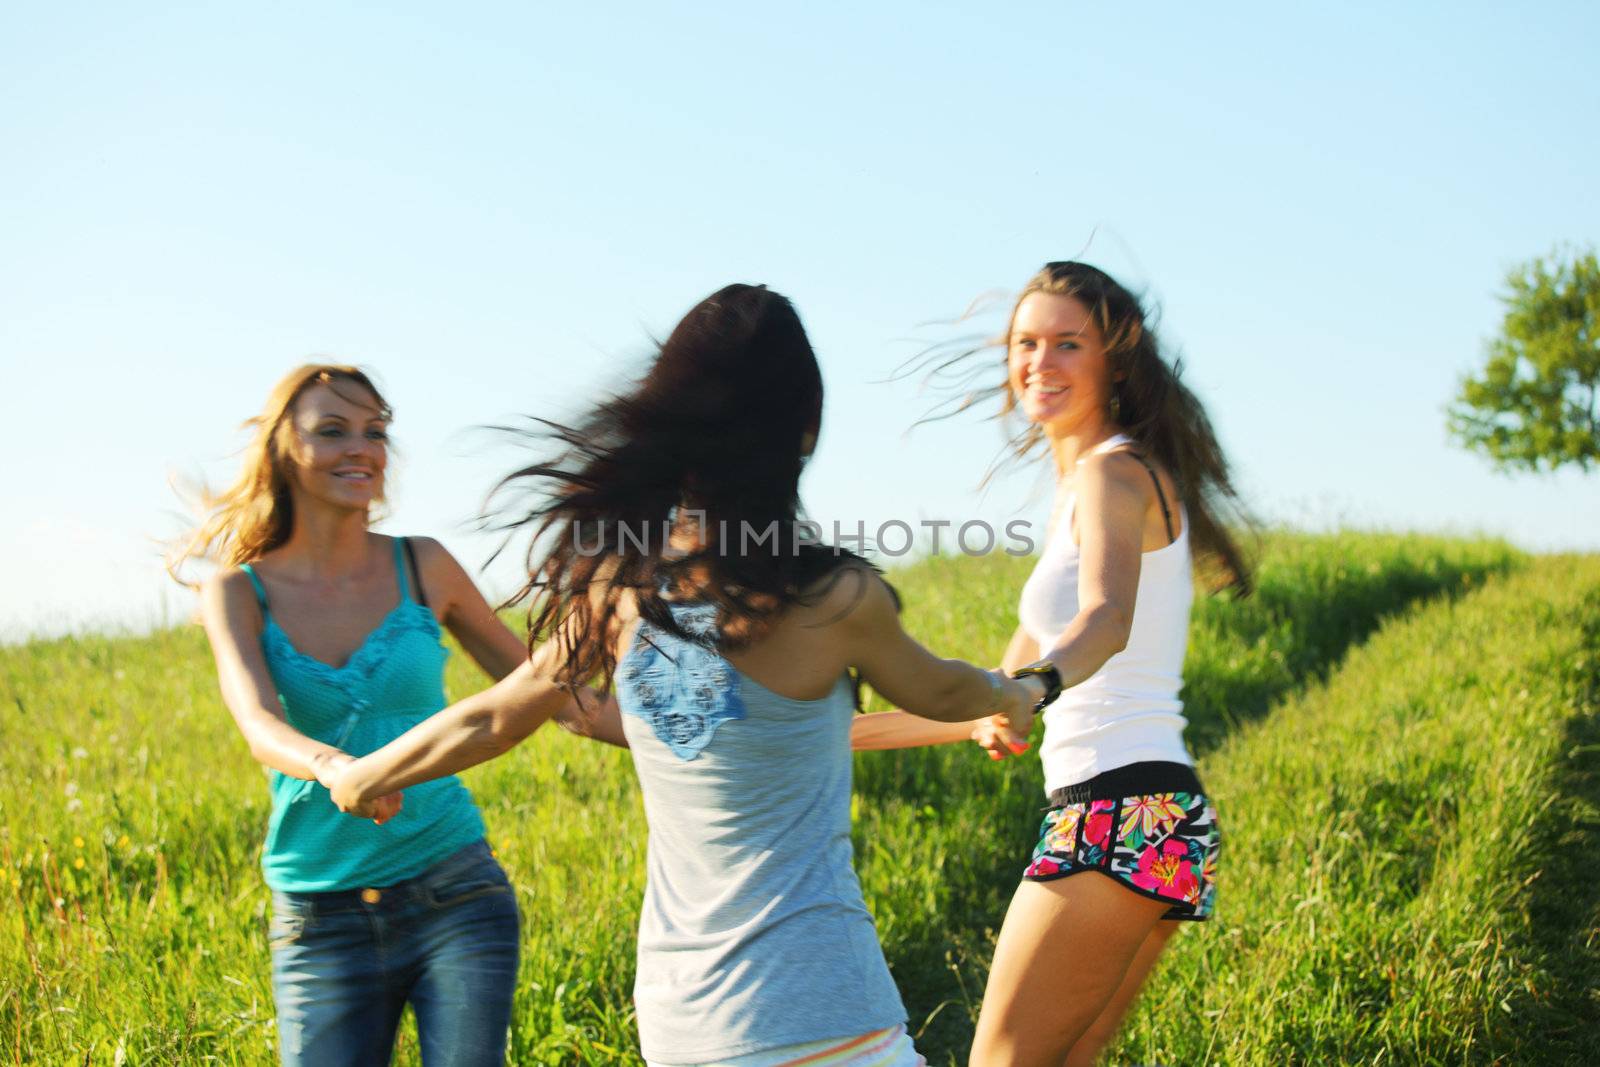 women grass fun by Yellowj